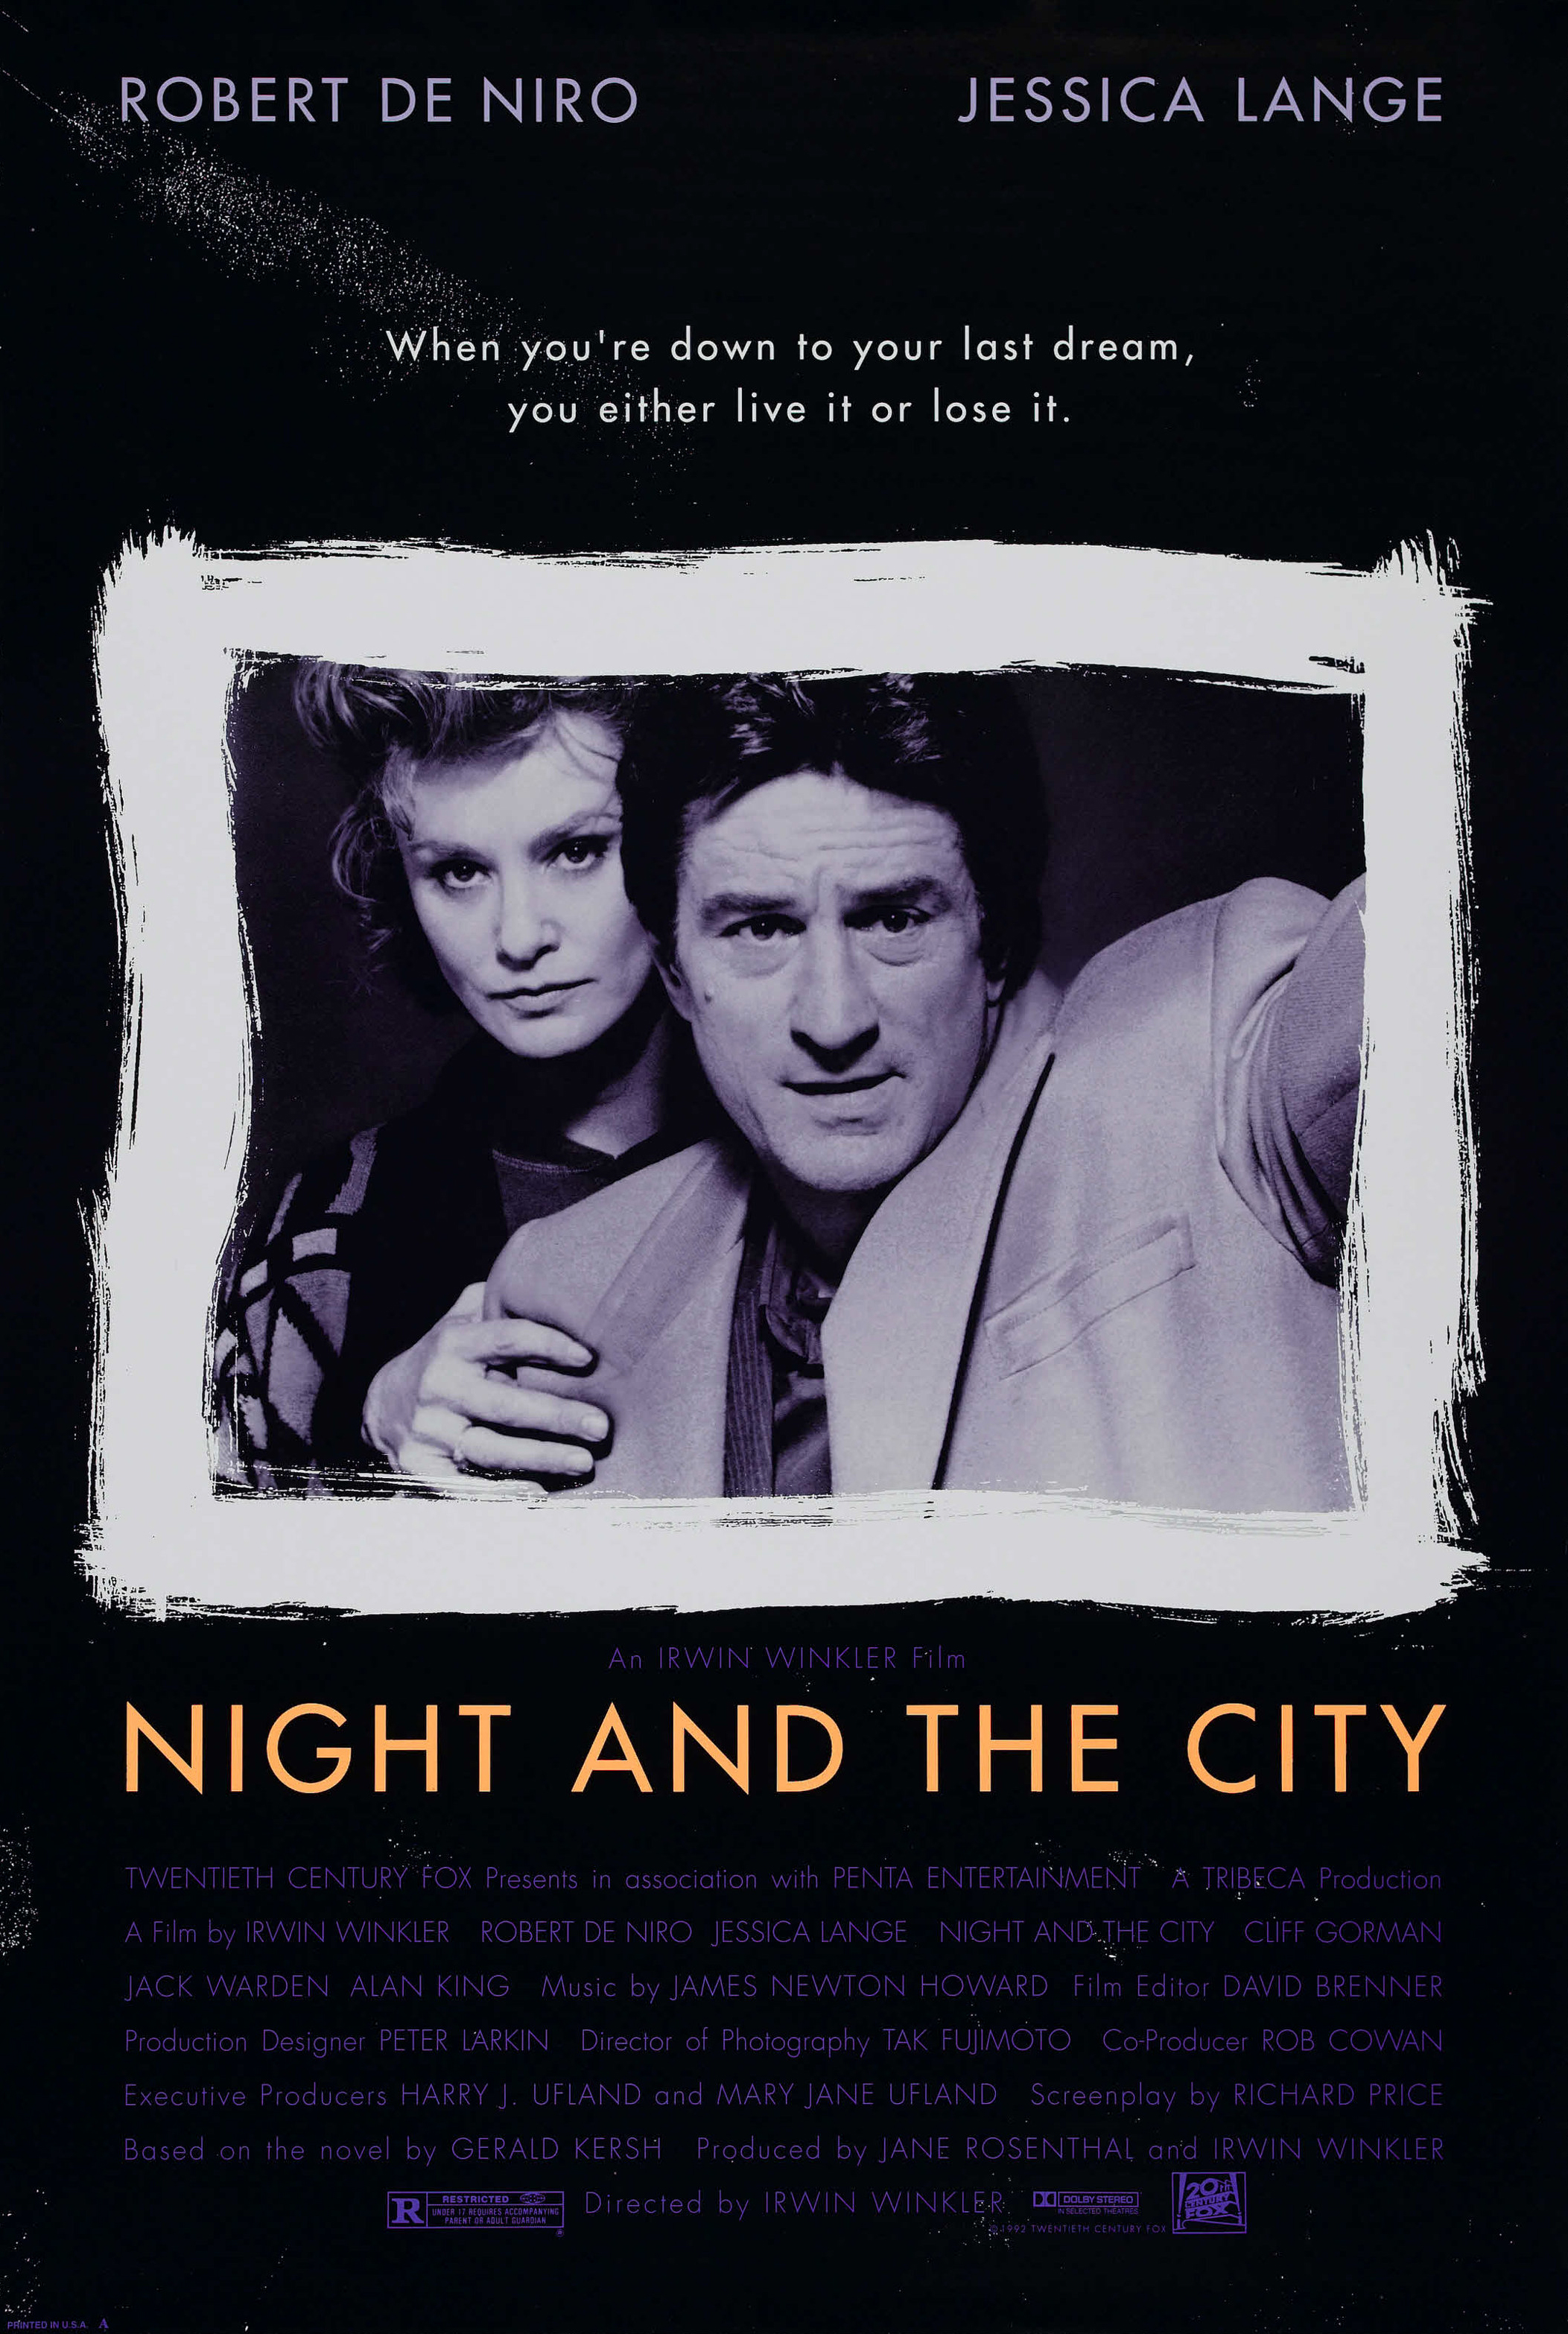 Stiahni si Filmy CZ/SK dabing Noc a mesto - Night And The City (1992)(CZ)[1080p][WEBDL] = CSFD 56%